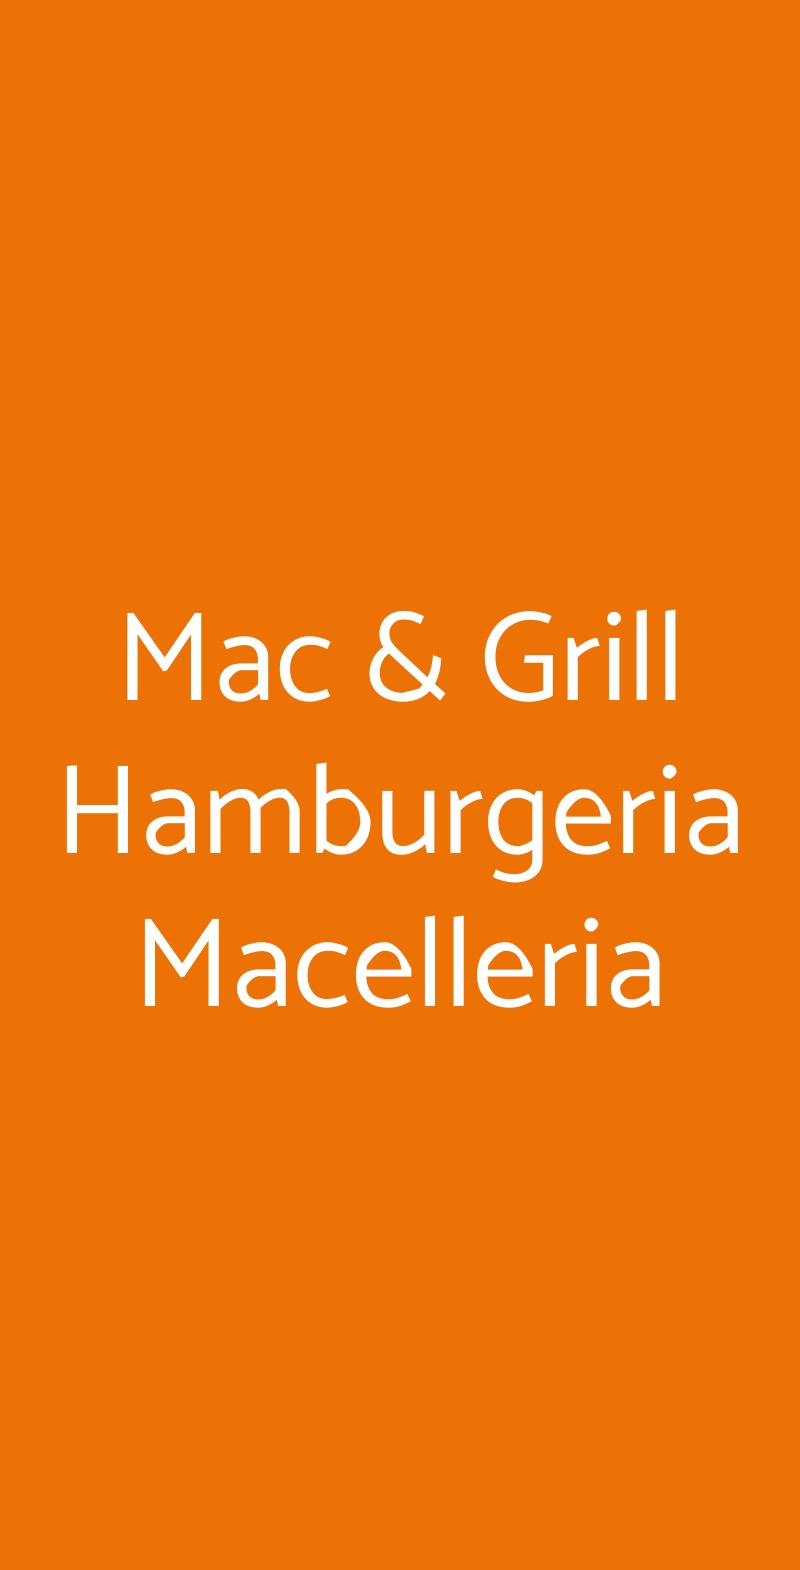 Mac & Grill Hamburgeria Macelleria Napoli menù 1 pagina